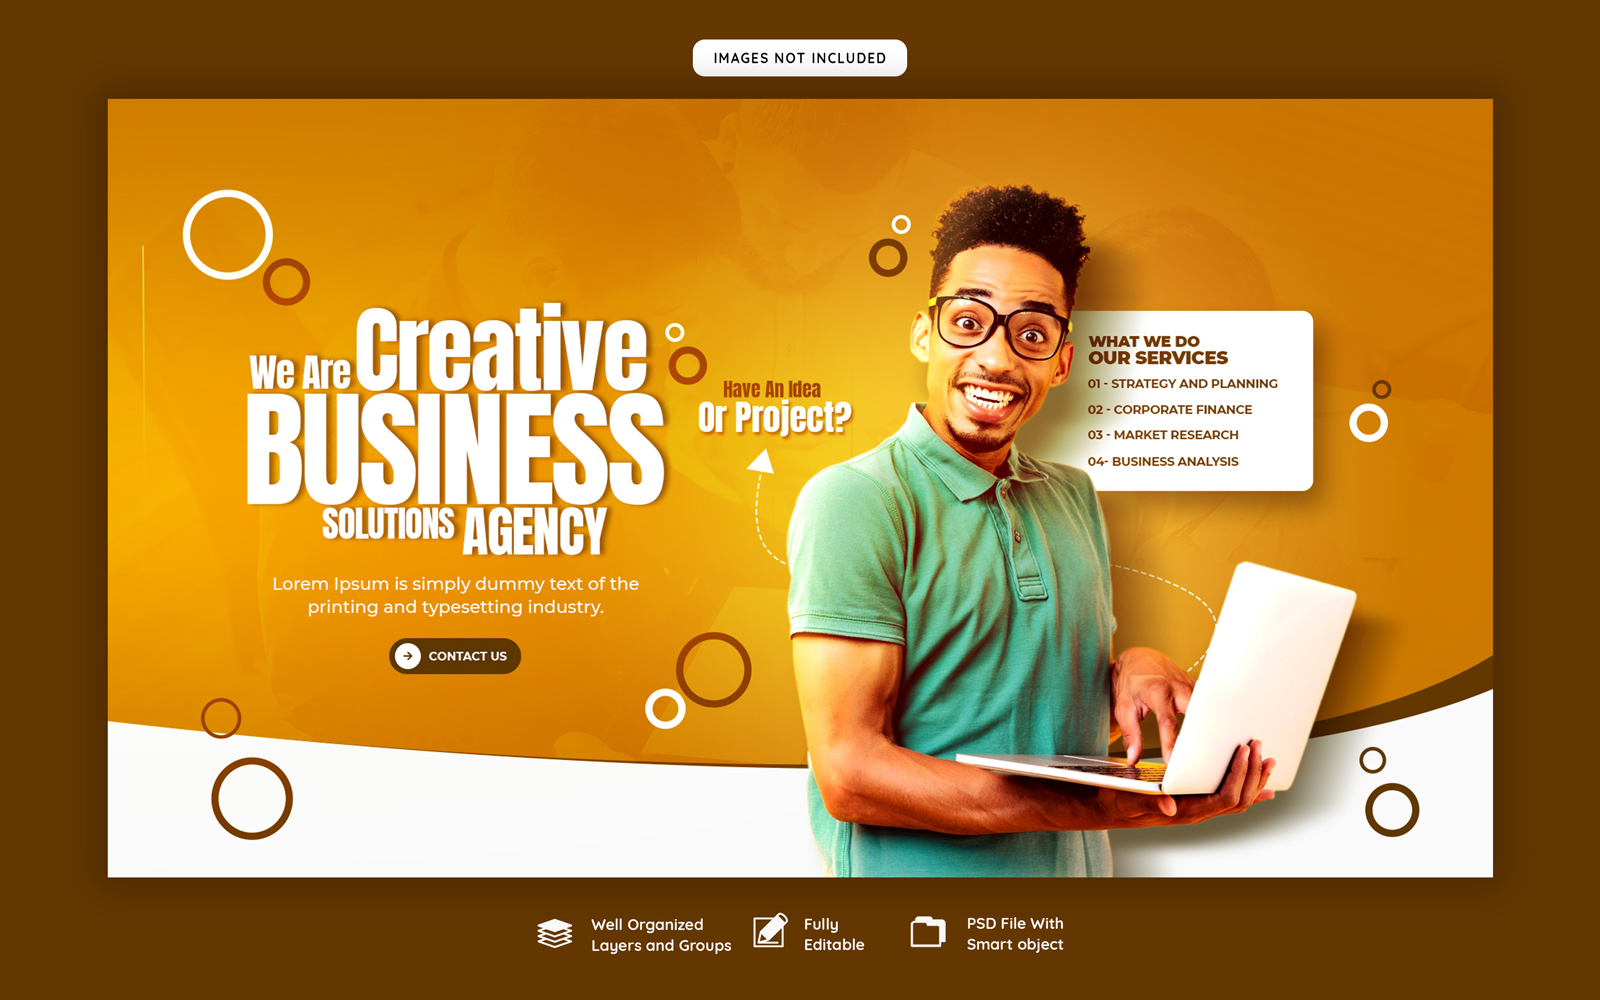 We Are Creative Digital Marketing Agency Social Media Banner Template